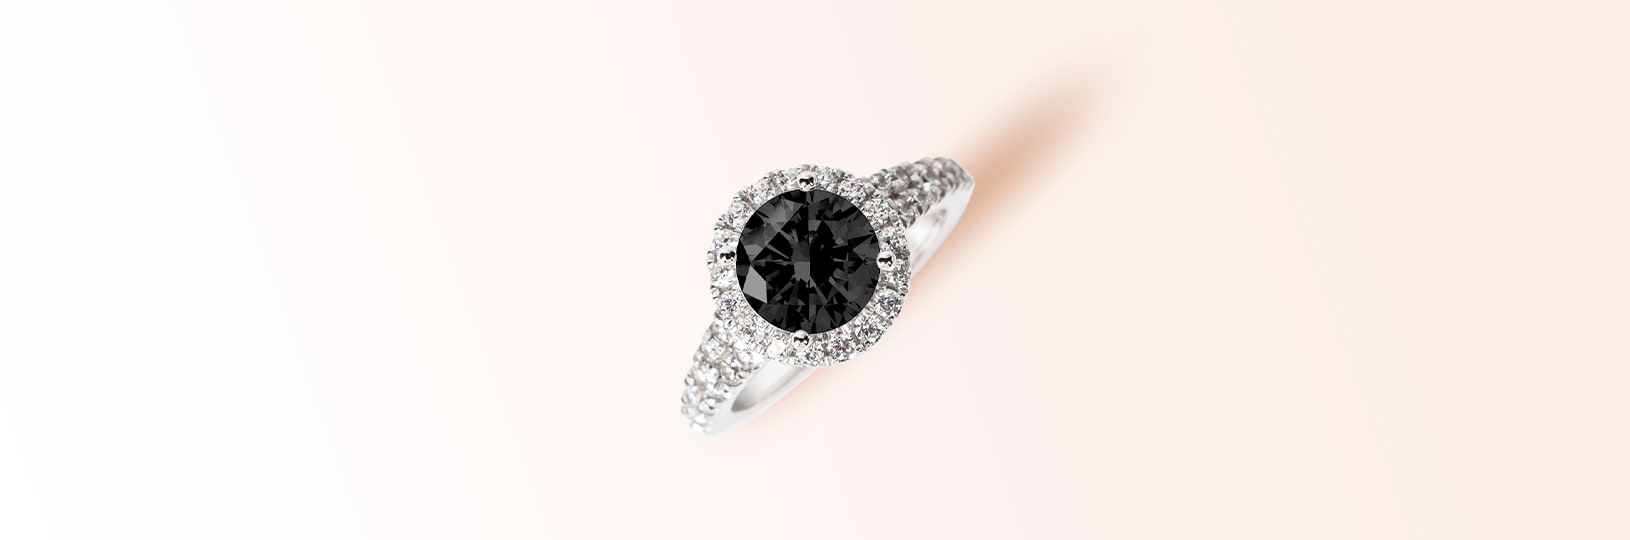 Photo of a black diamond engagement ring.